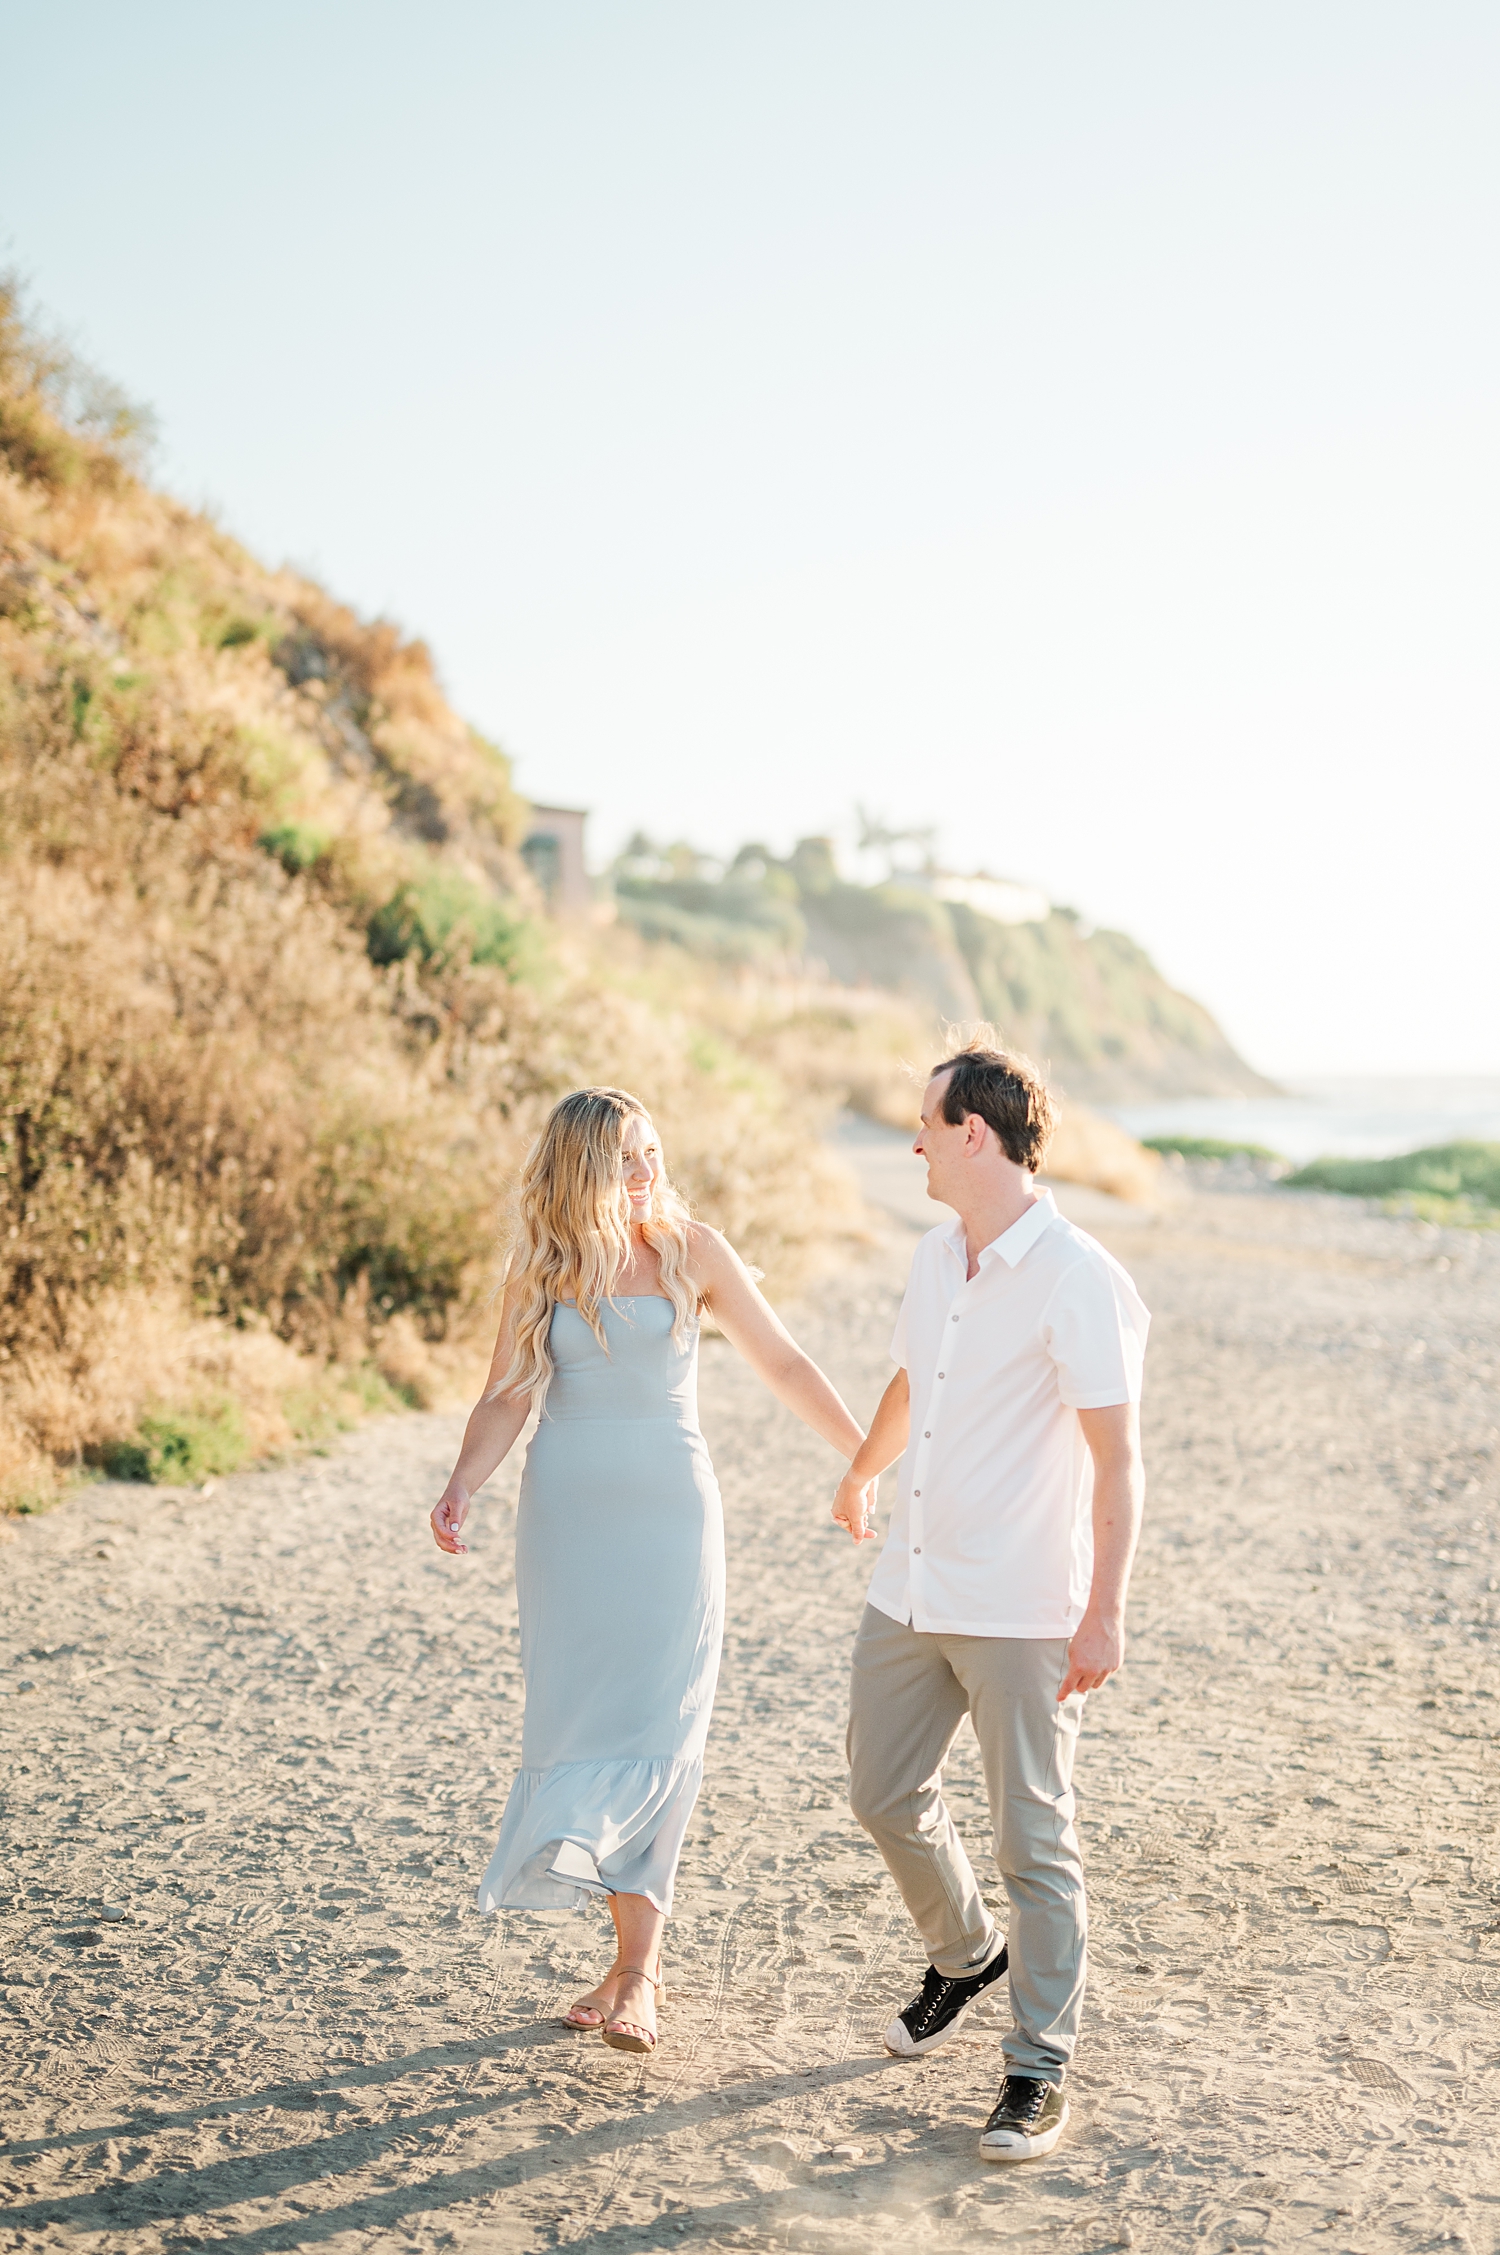 Nataly Hernandez Photography | Palos Verdes Estates Engagement Session | Romantic | Beach | Sunset | Film | Editorial | Fine Art Wedding Photographer -58.jpg